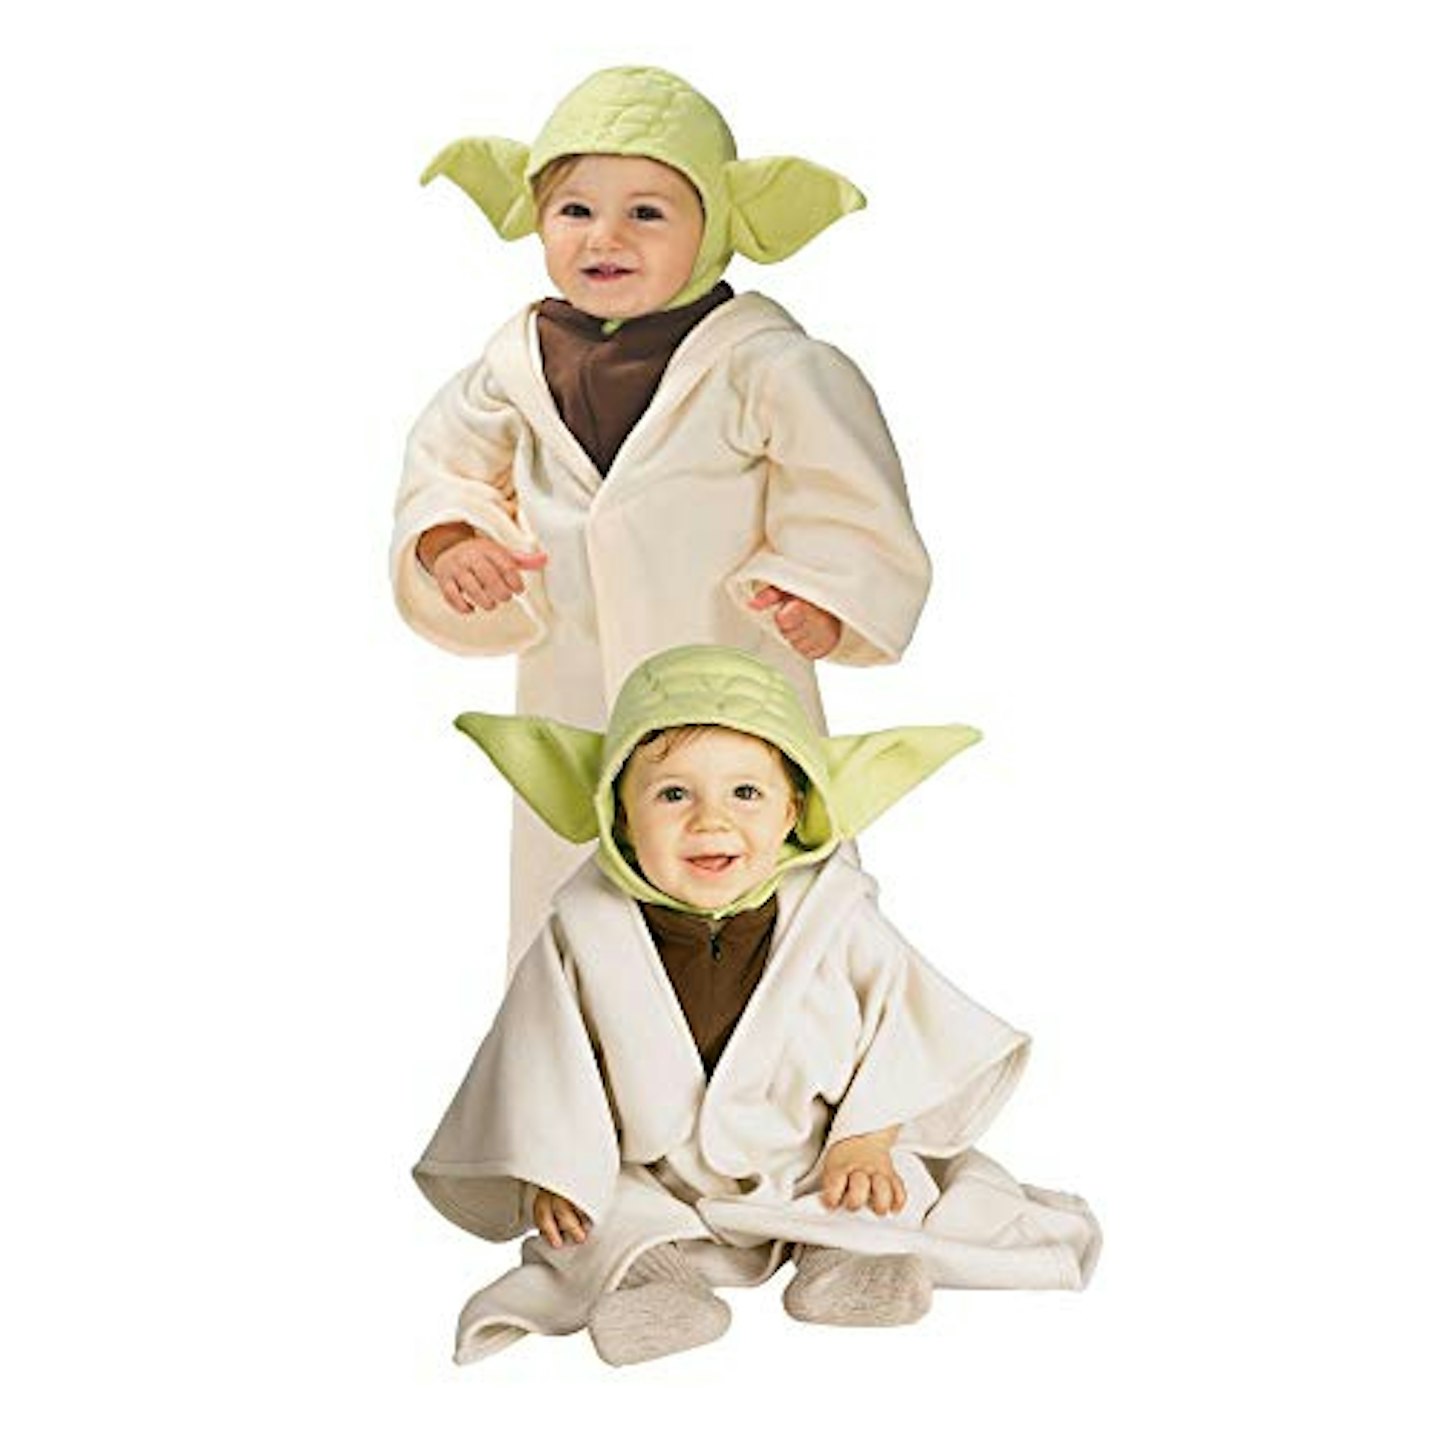 Rubieu0026#039;s Official Childu0026#039;s Disney Star Wars Toddleru0026#039;s Yoda - Toddler